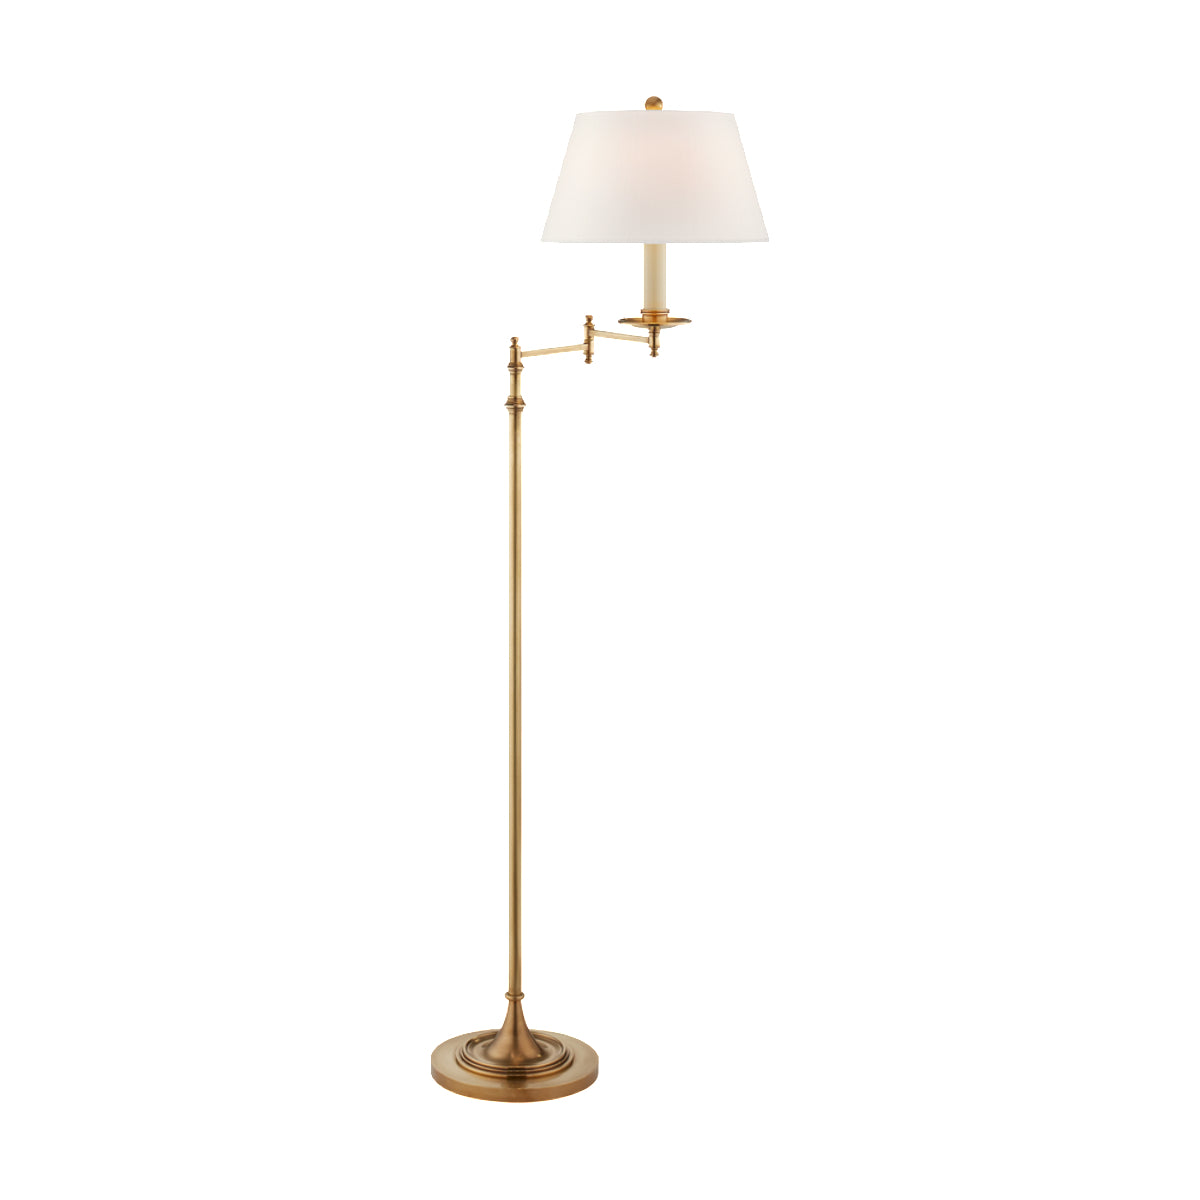 Dorchester Swing Arm Floor Lamp